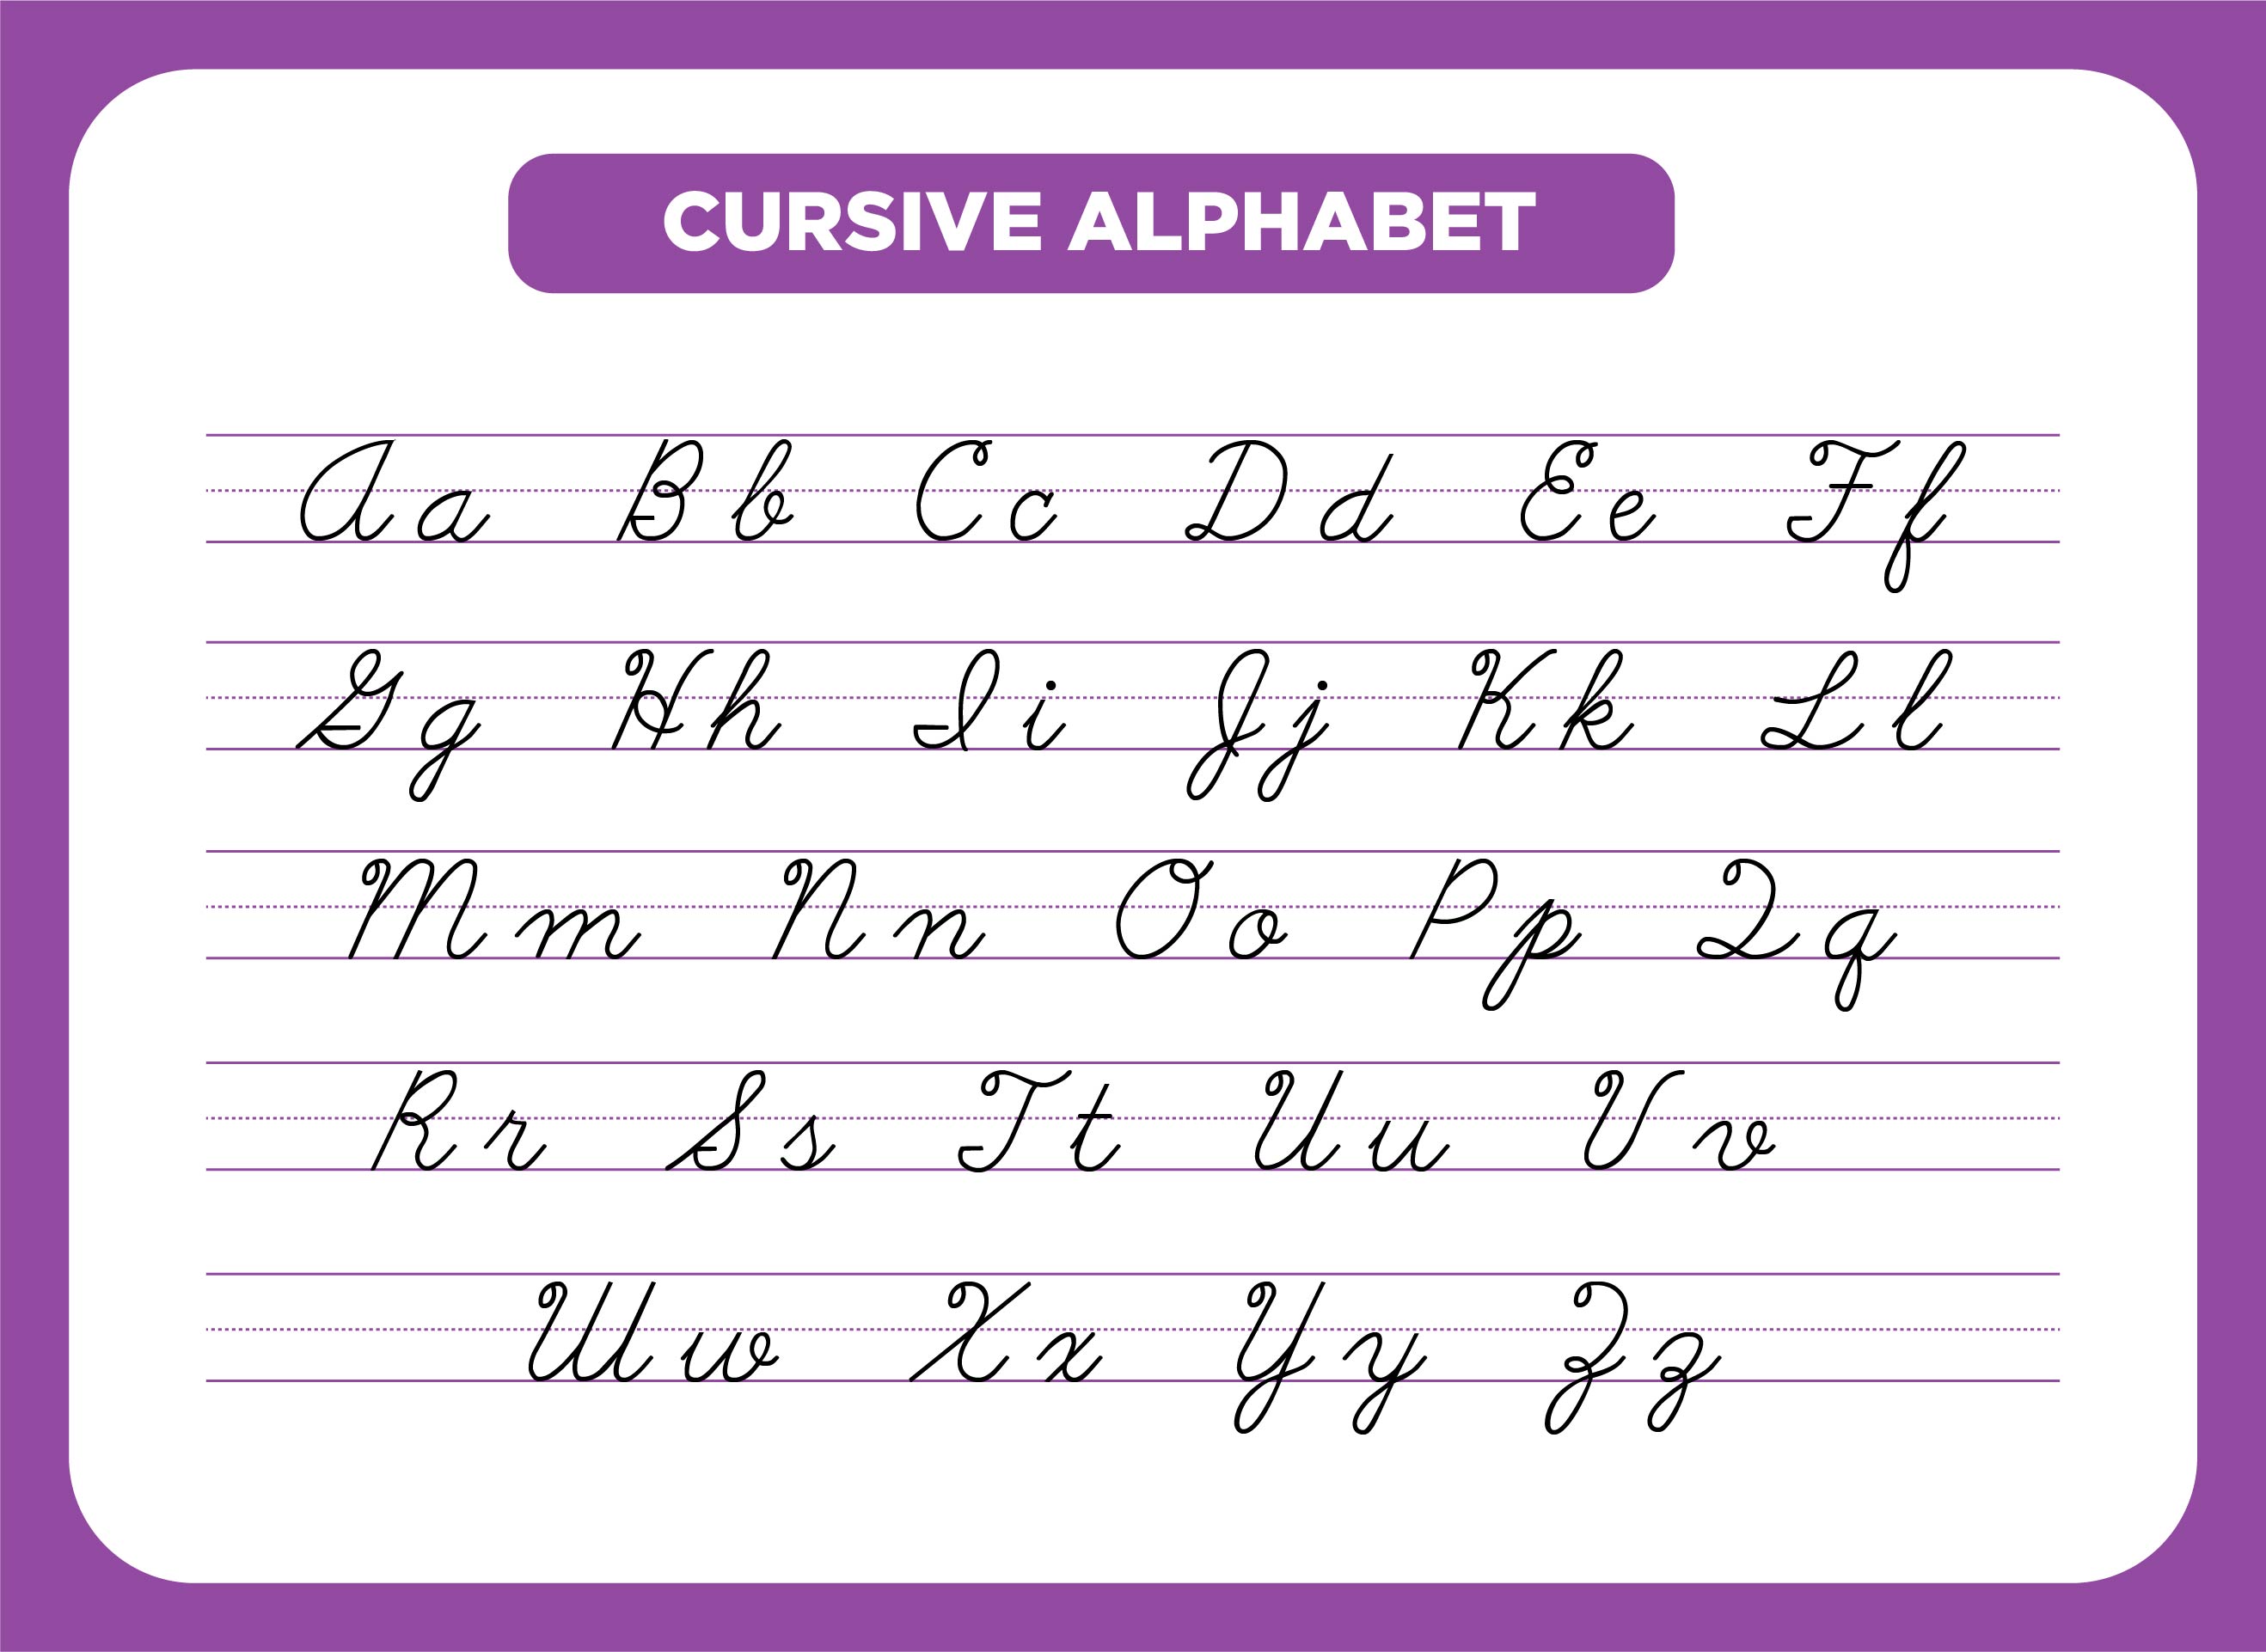 5-best-images-of-printable-cursive-alphabet-free-printable-cursive